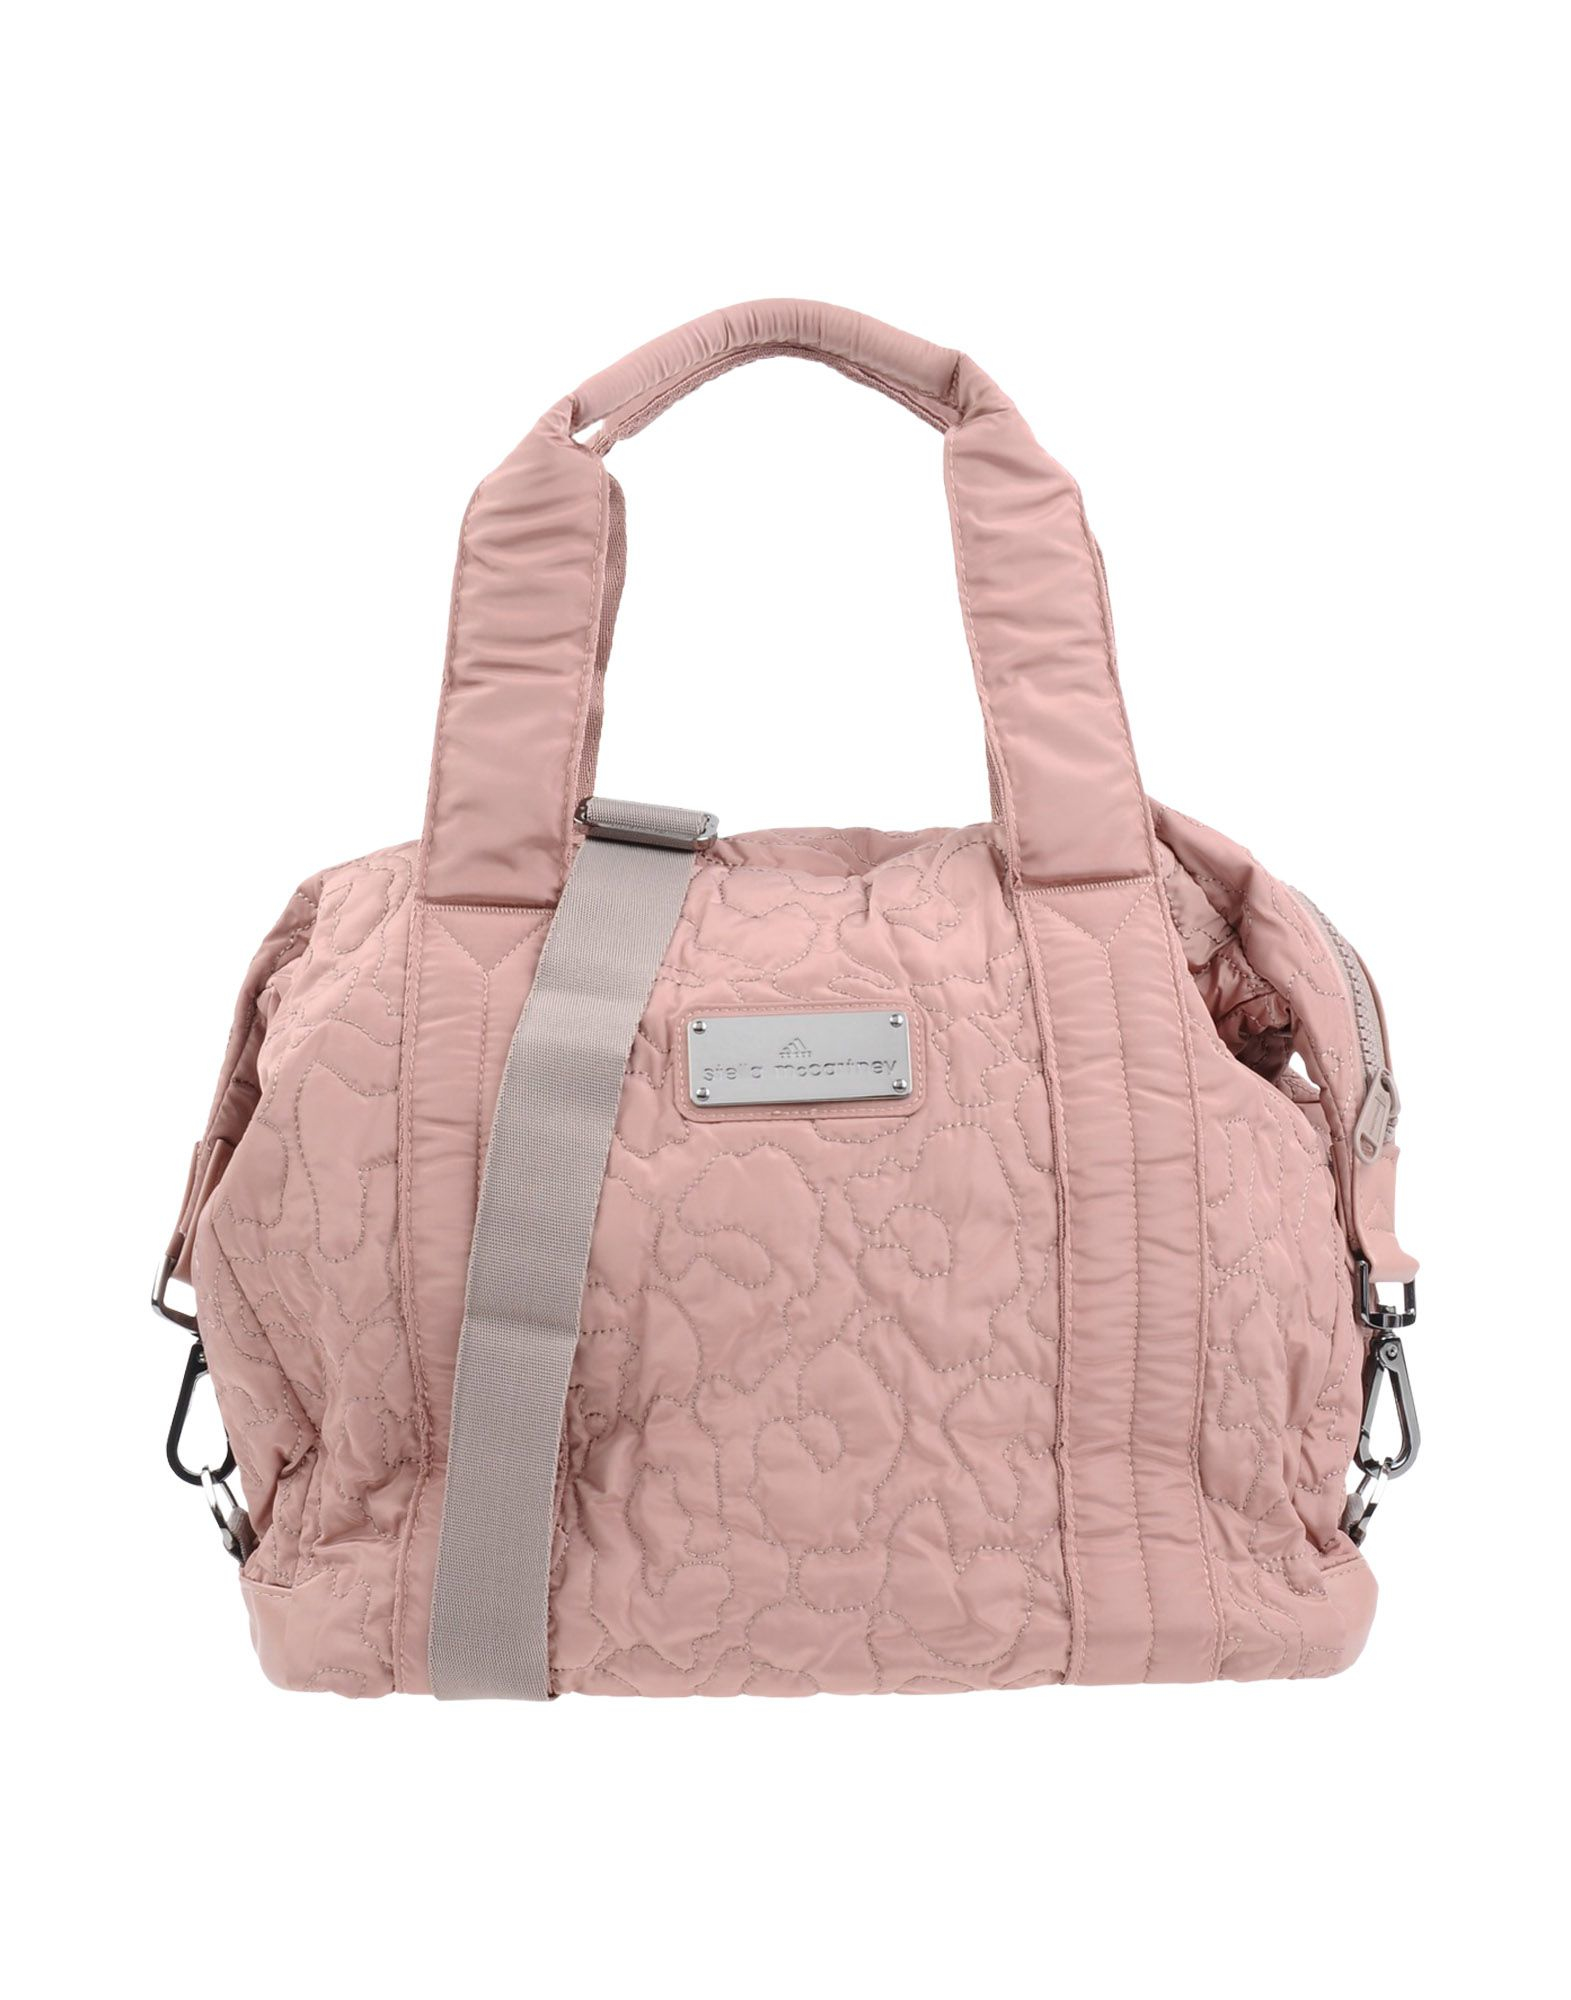 adidas By Stella McCartney Medium Quilted Gym Bag in Pastel Pink (Pink) |  Lyst Australia